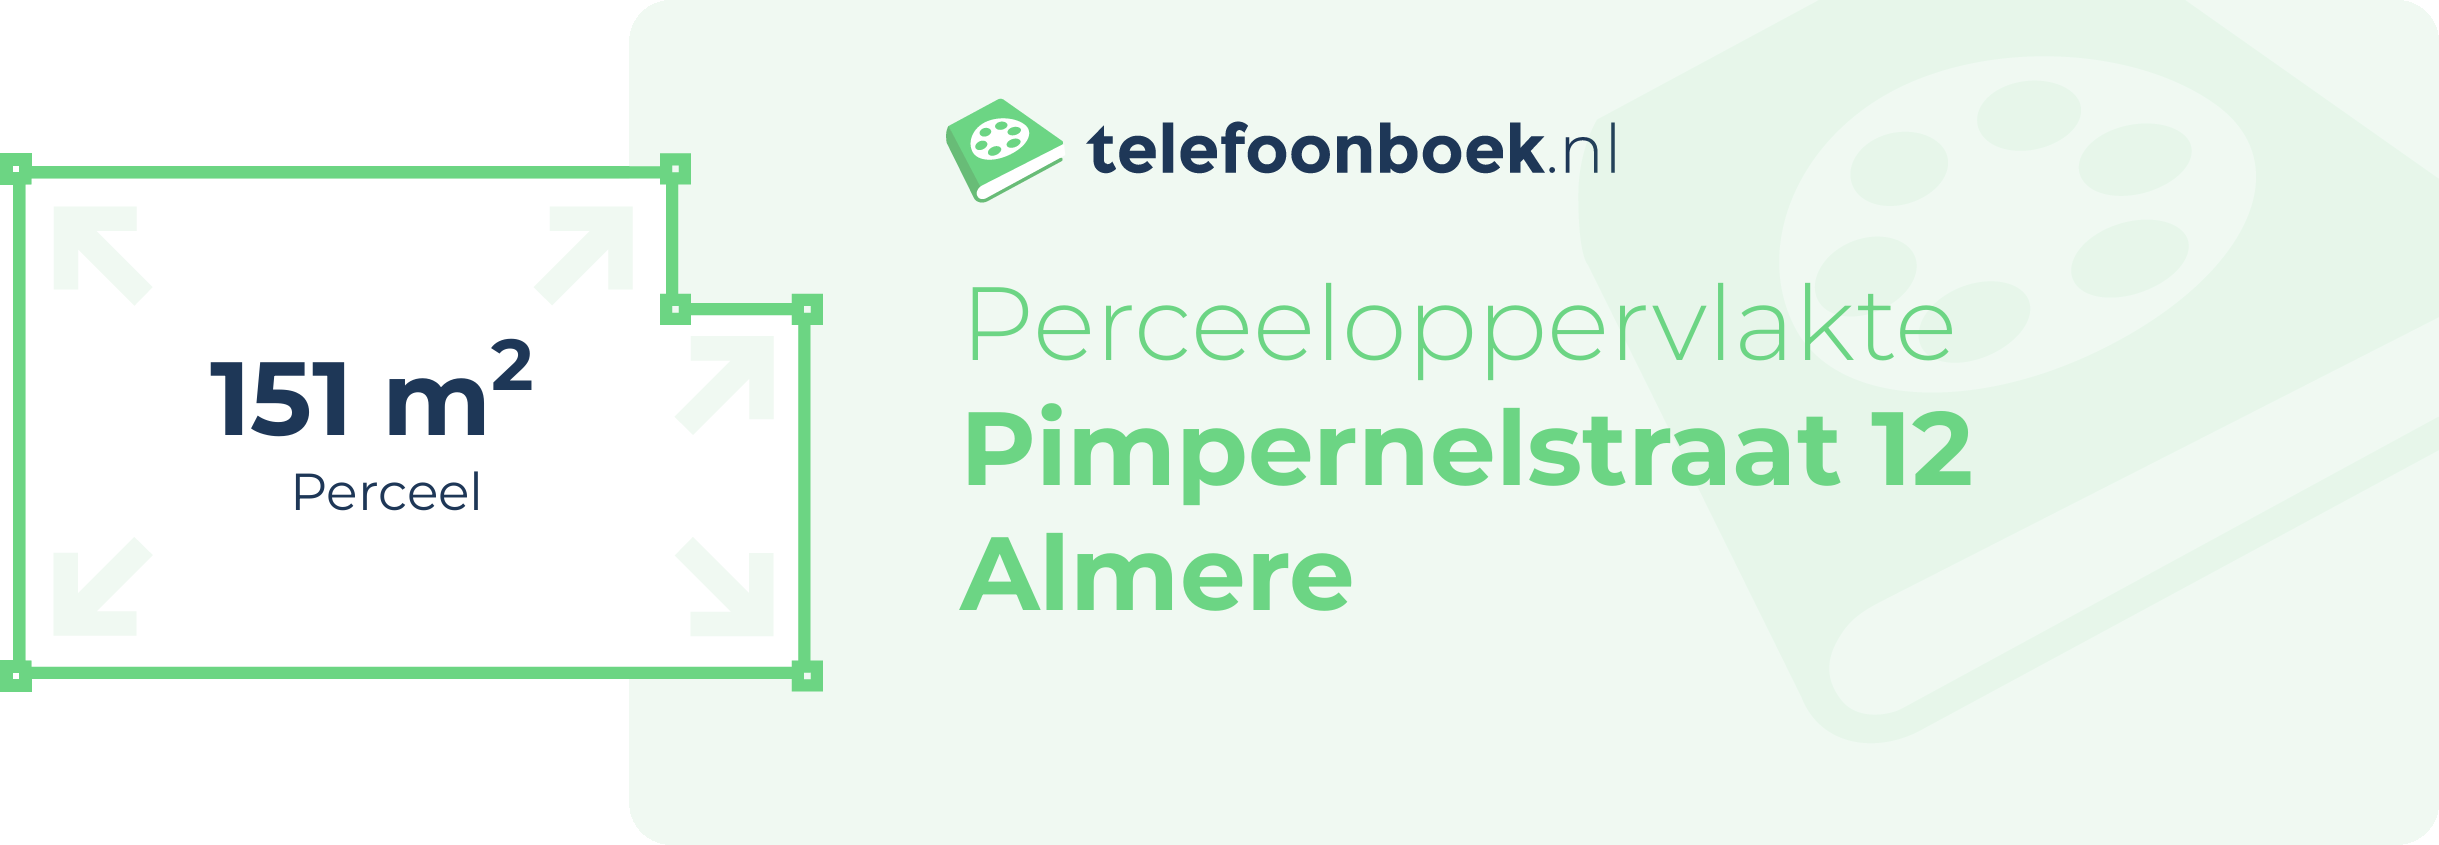 Perceeloppervlakte Pimpernelstraat 12 Almere